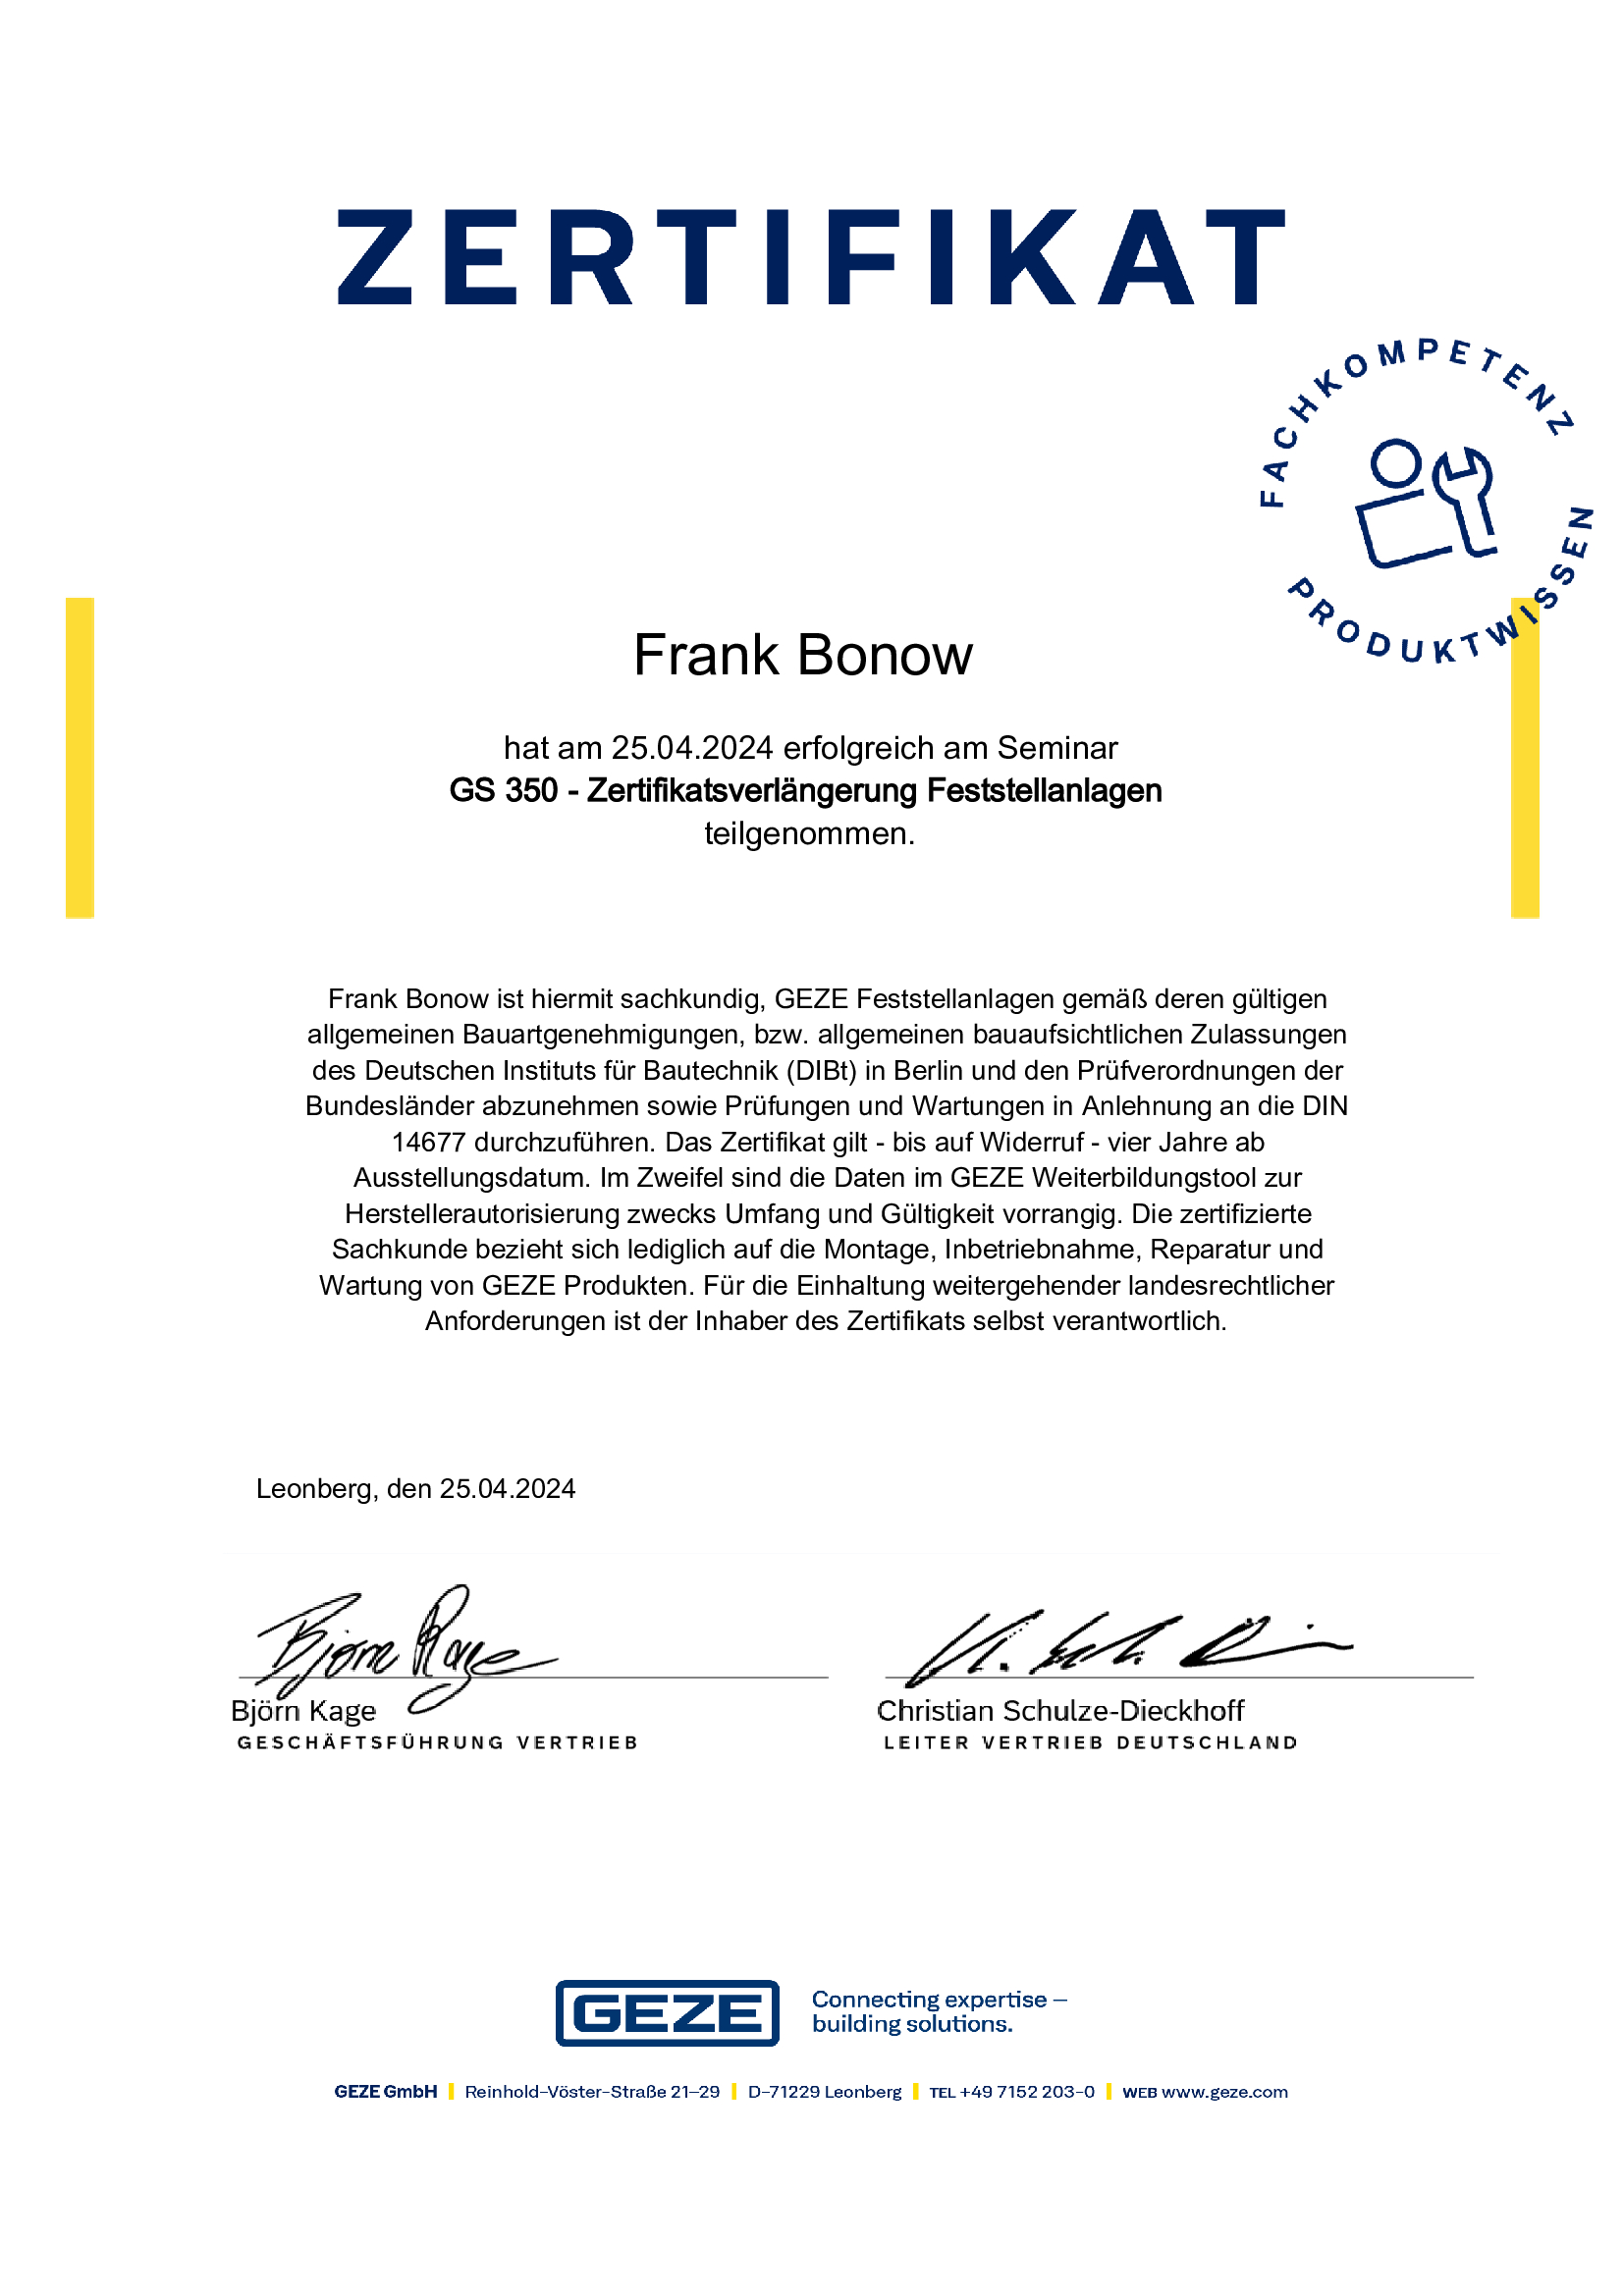 Frank Bonow - Zertifikat Feststellanlagen